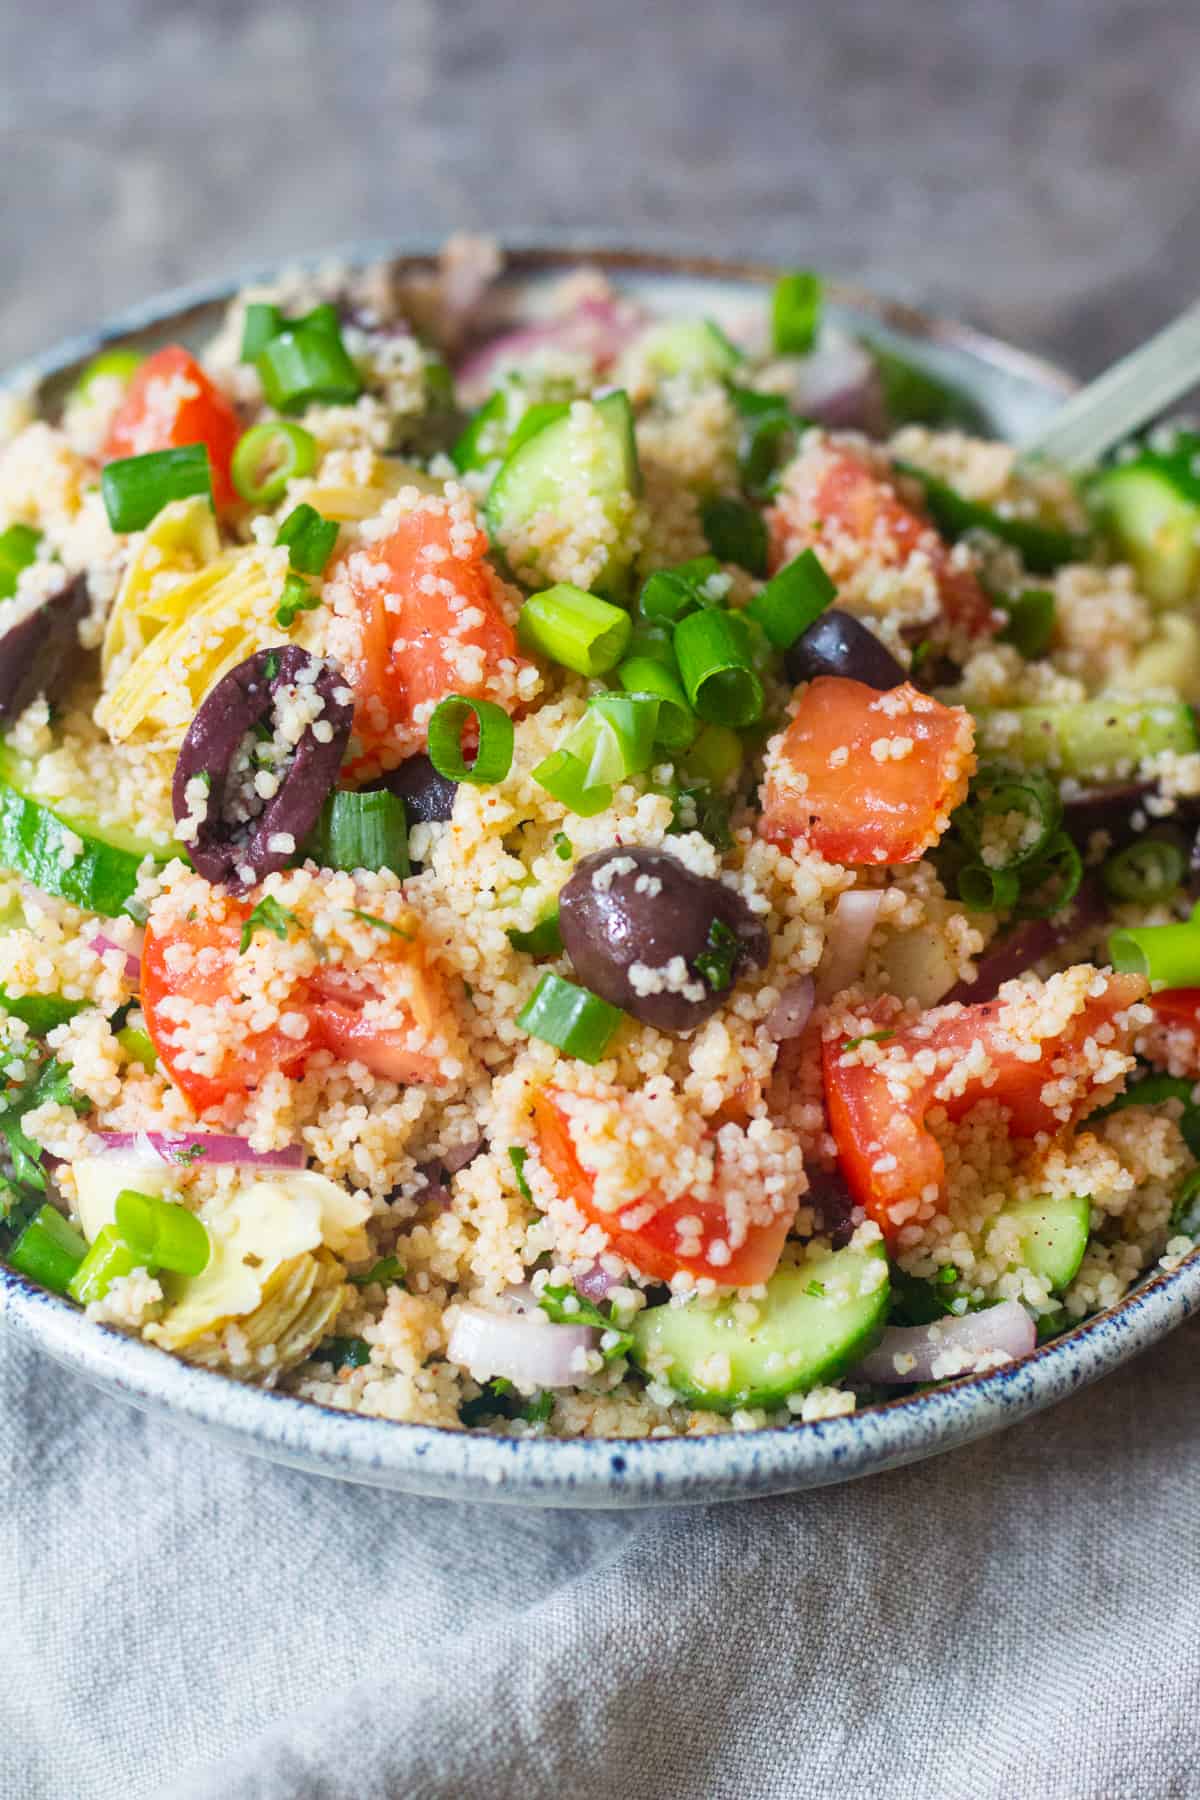 couscous salad
Mediterranean diet recipes